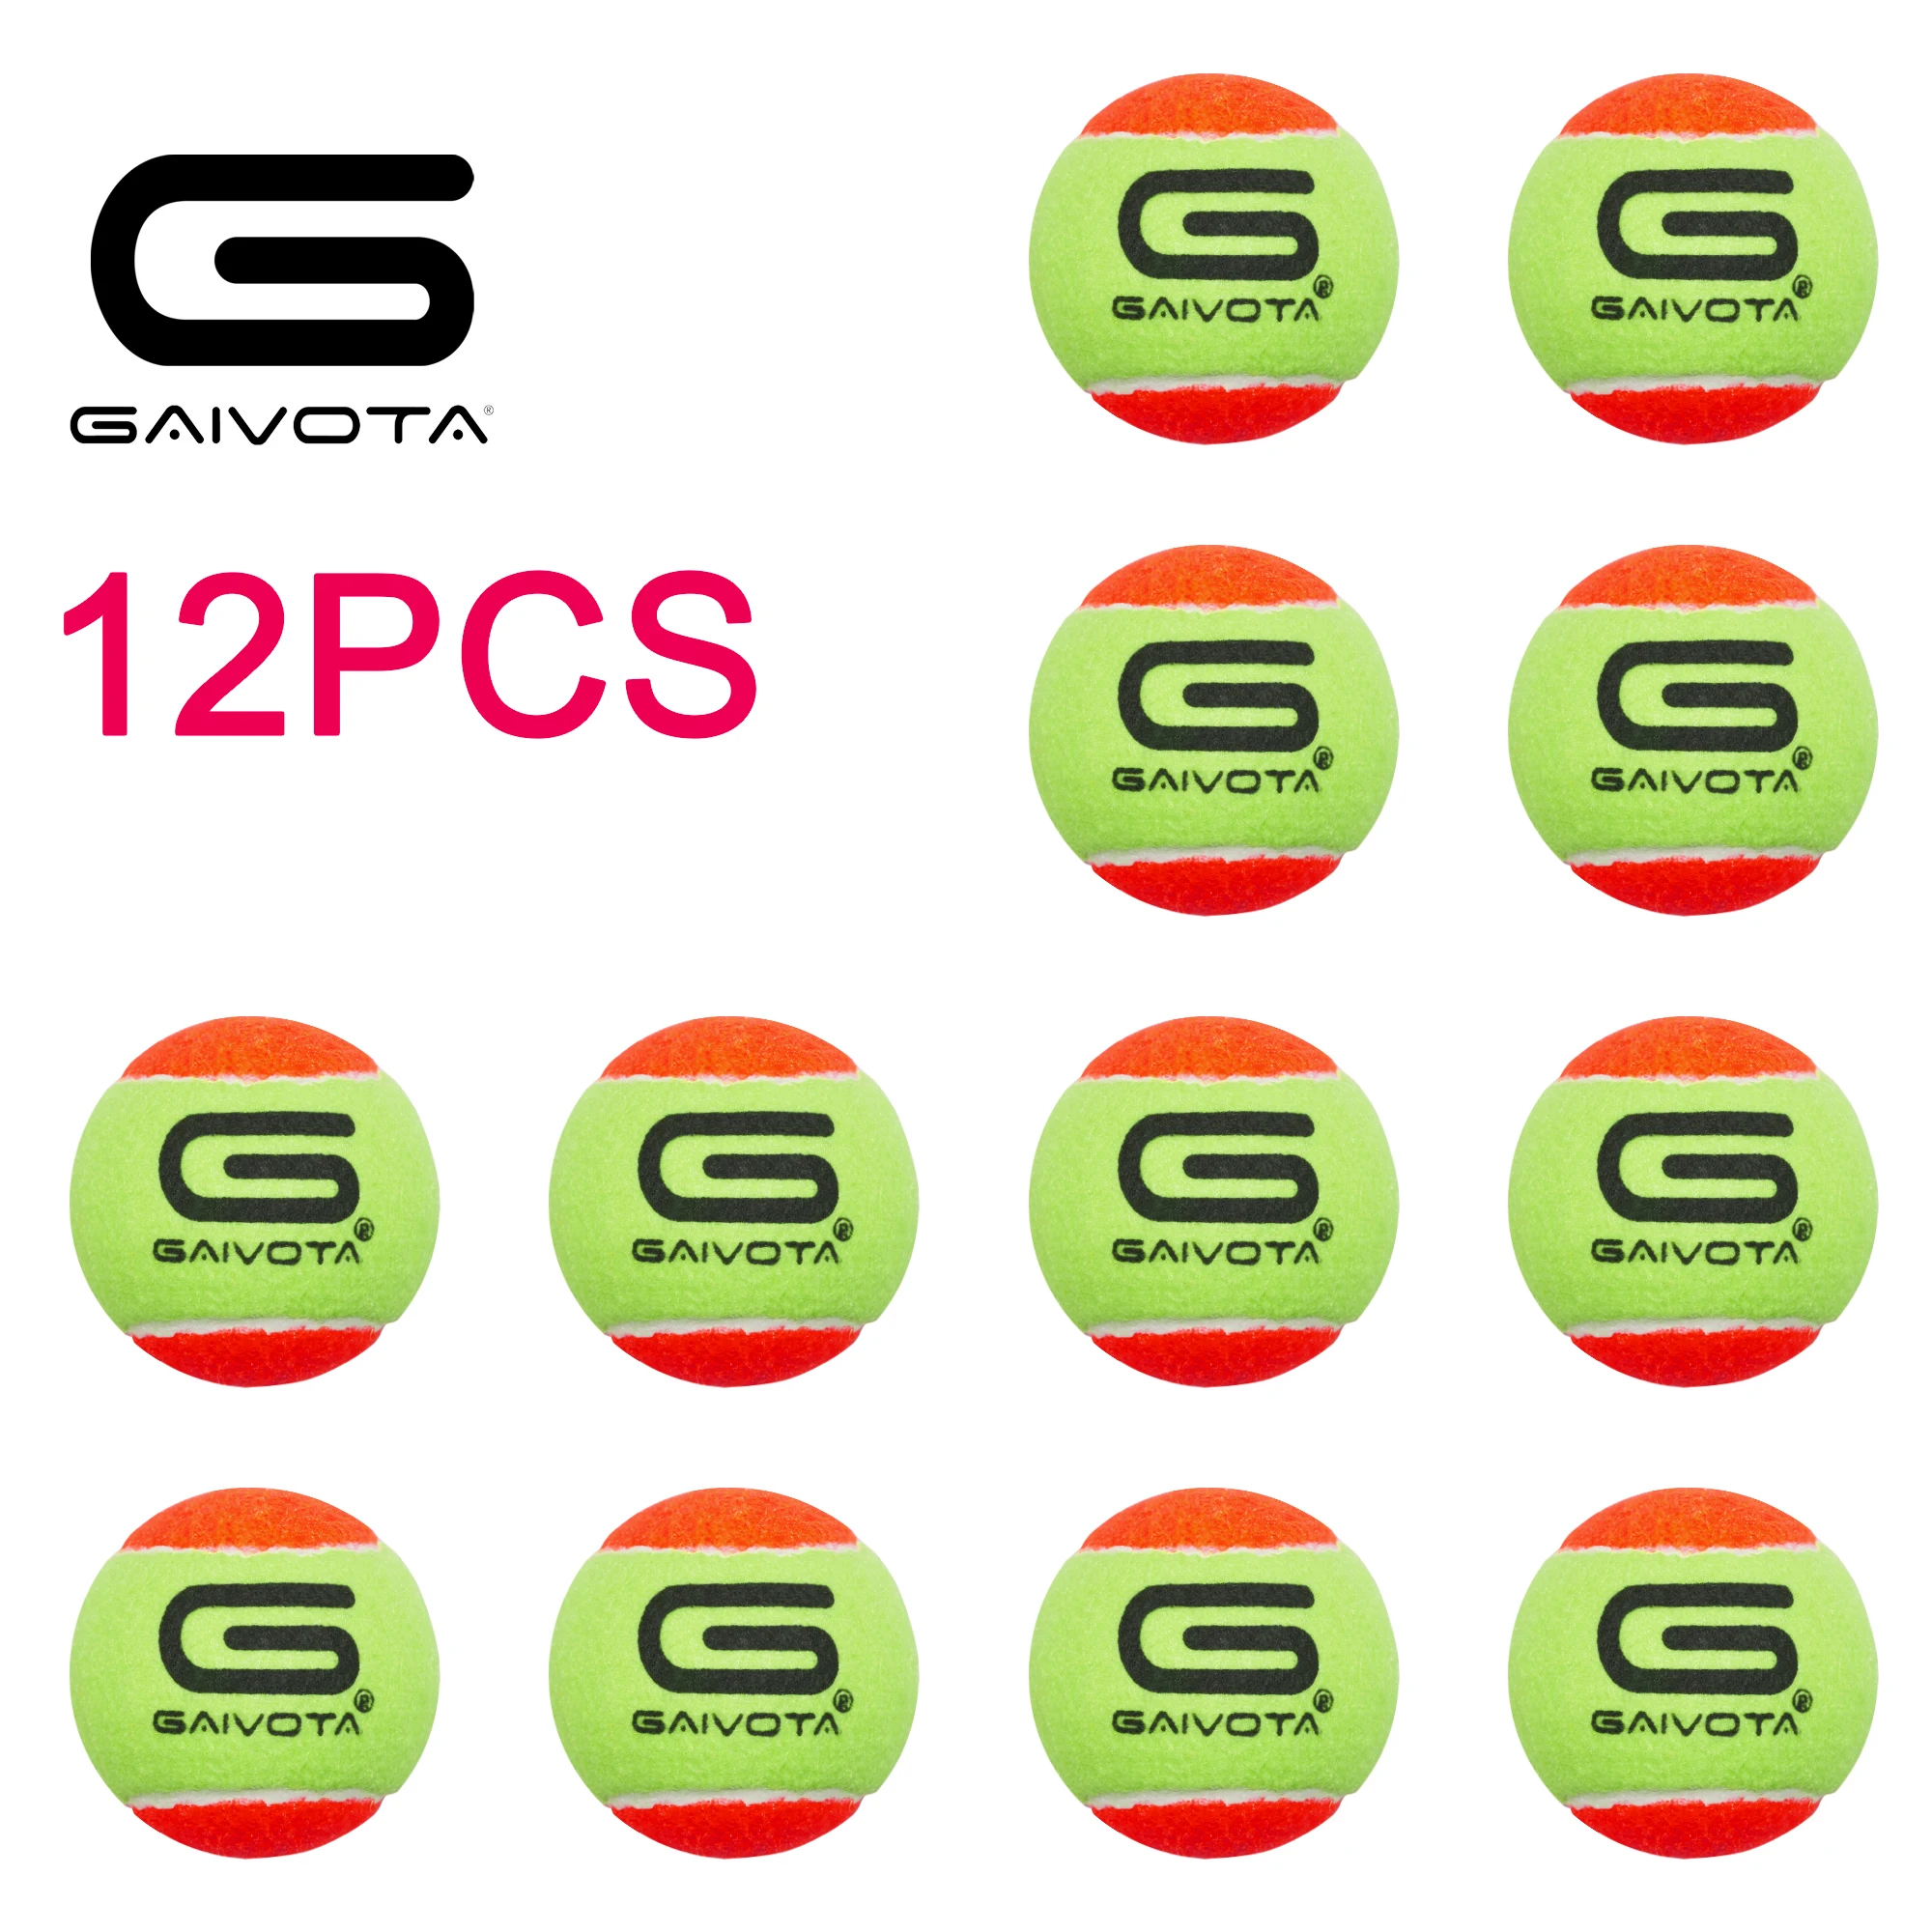 GAIVOTA Professional Beach Tennis Standard Pressure Slow Training Ball Outdoor Training Tennis Accessories